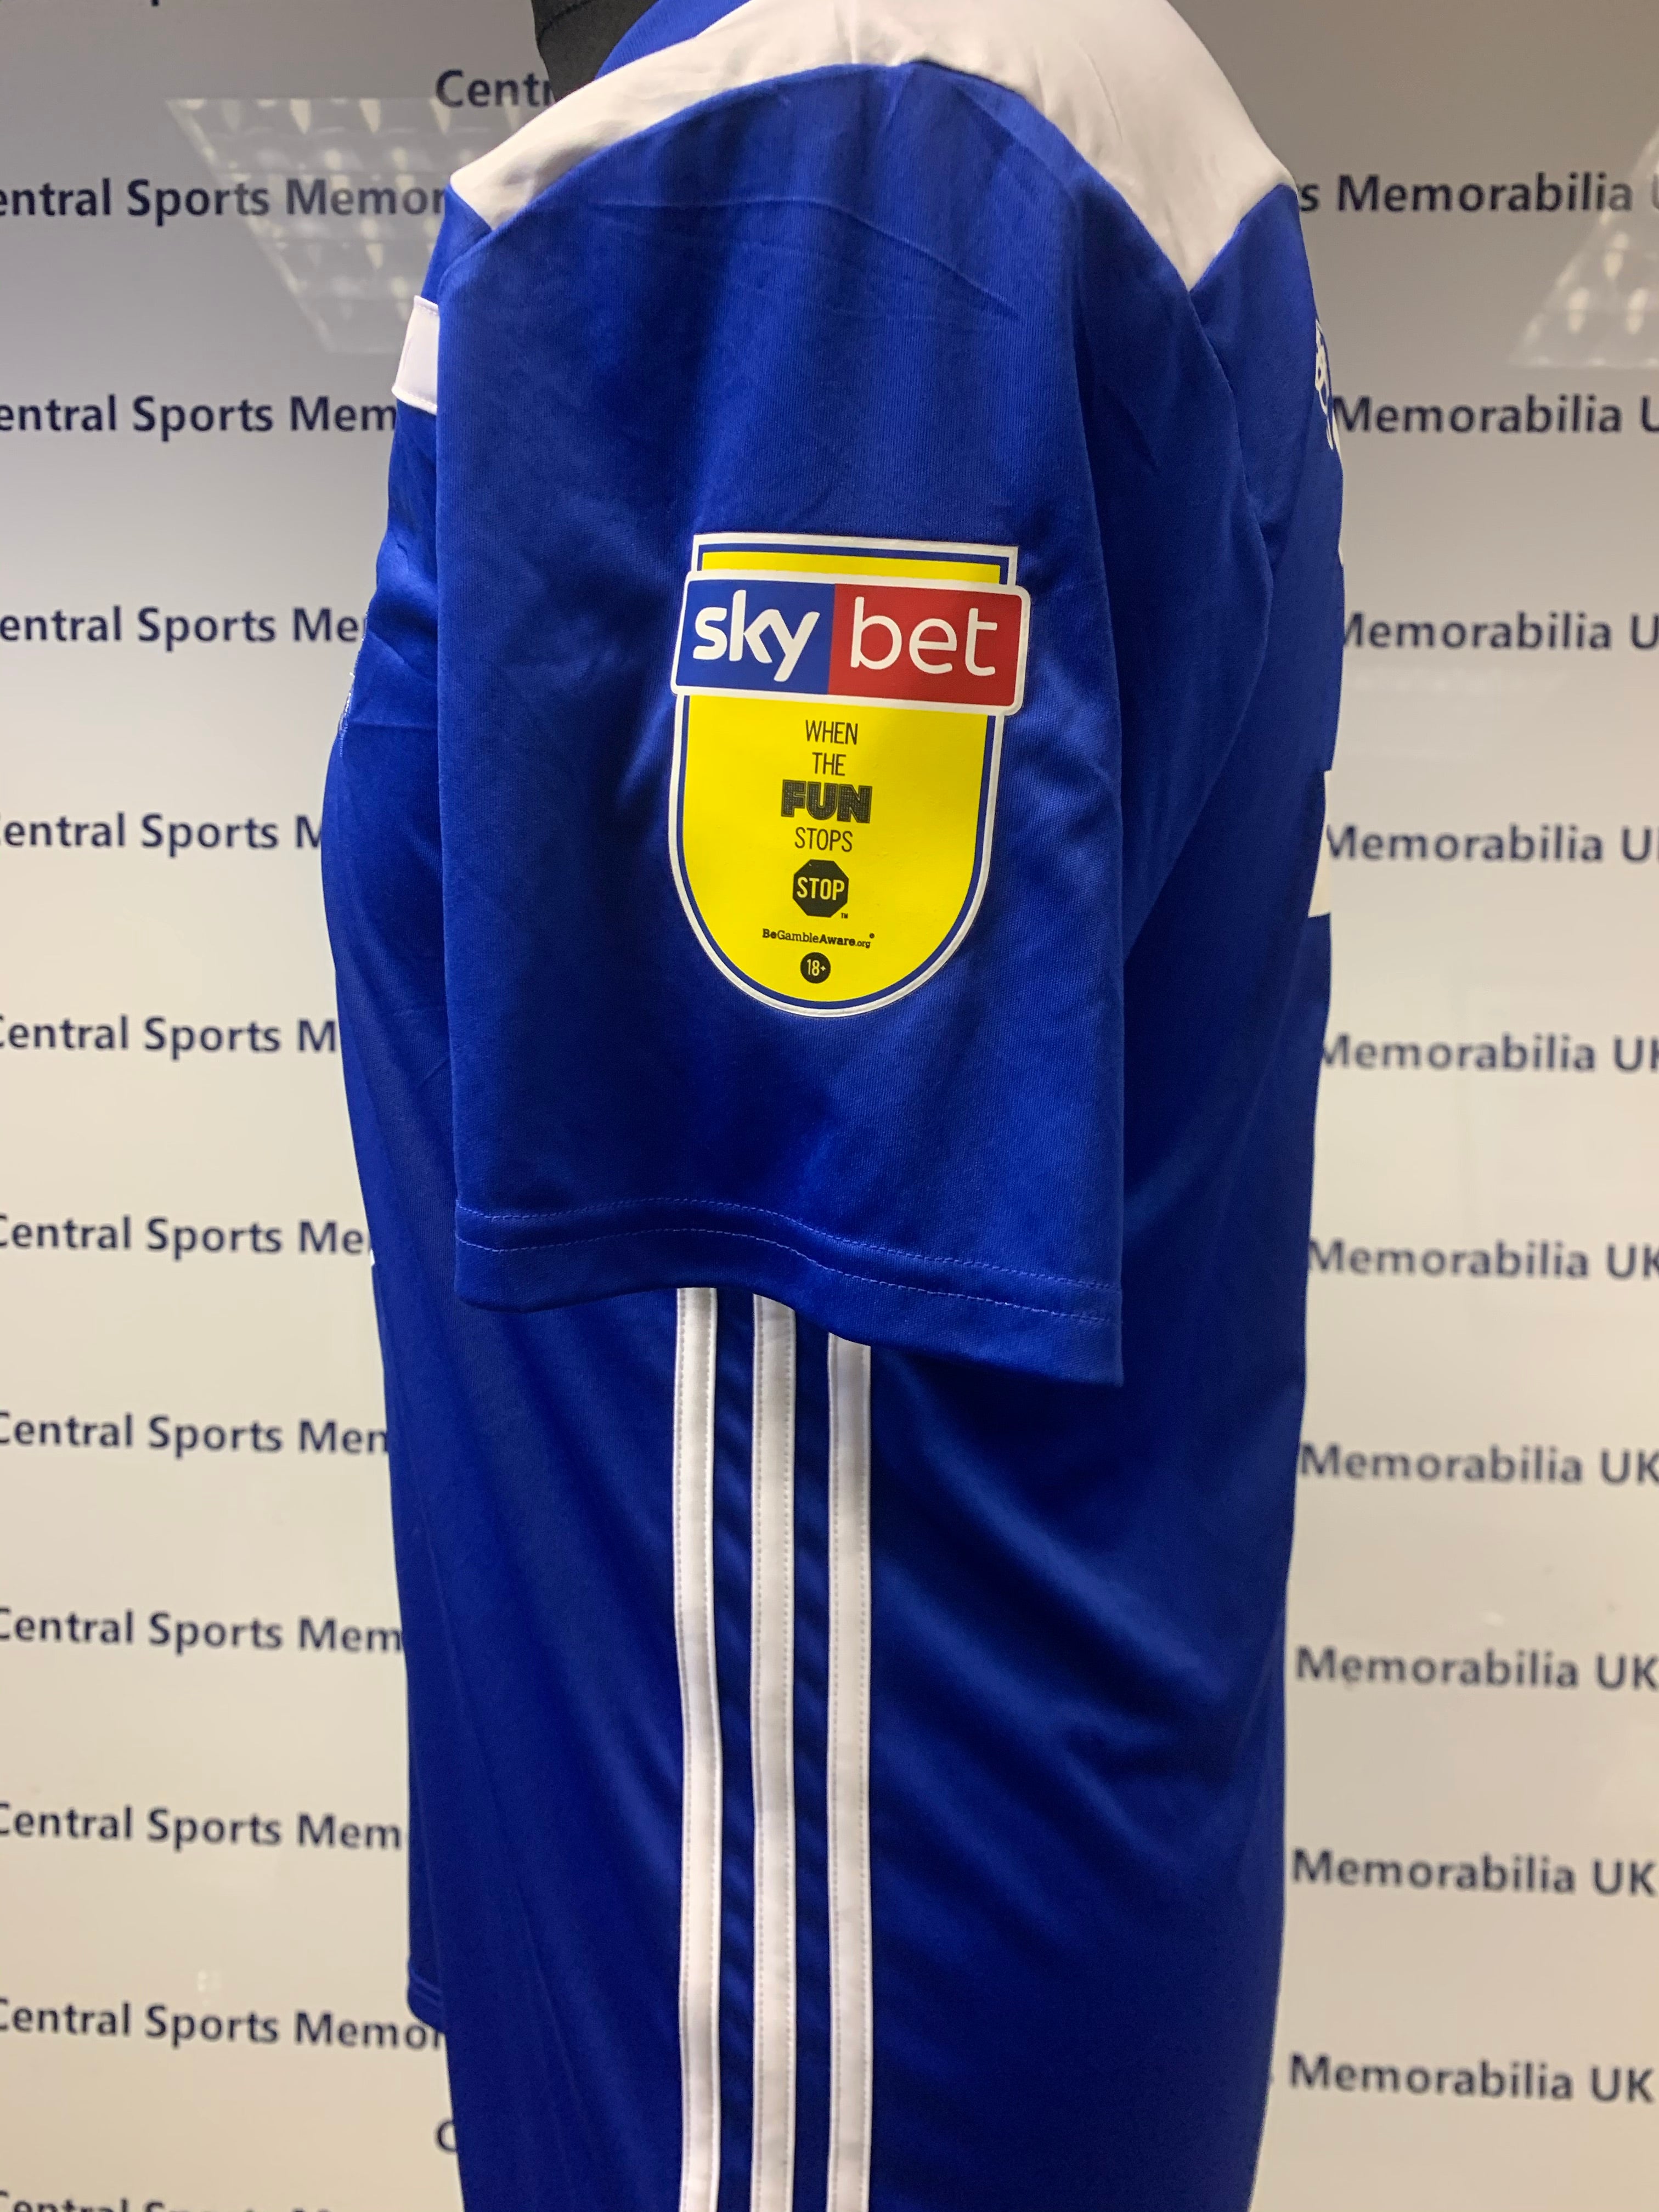 Isaac Vassell Match Worn Special Birmingham City Shirt - Geoff Horsfield foundation game.